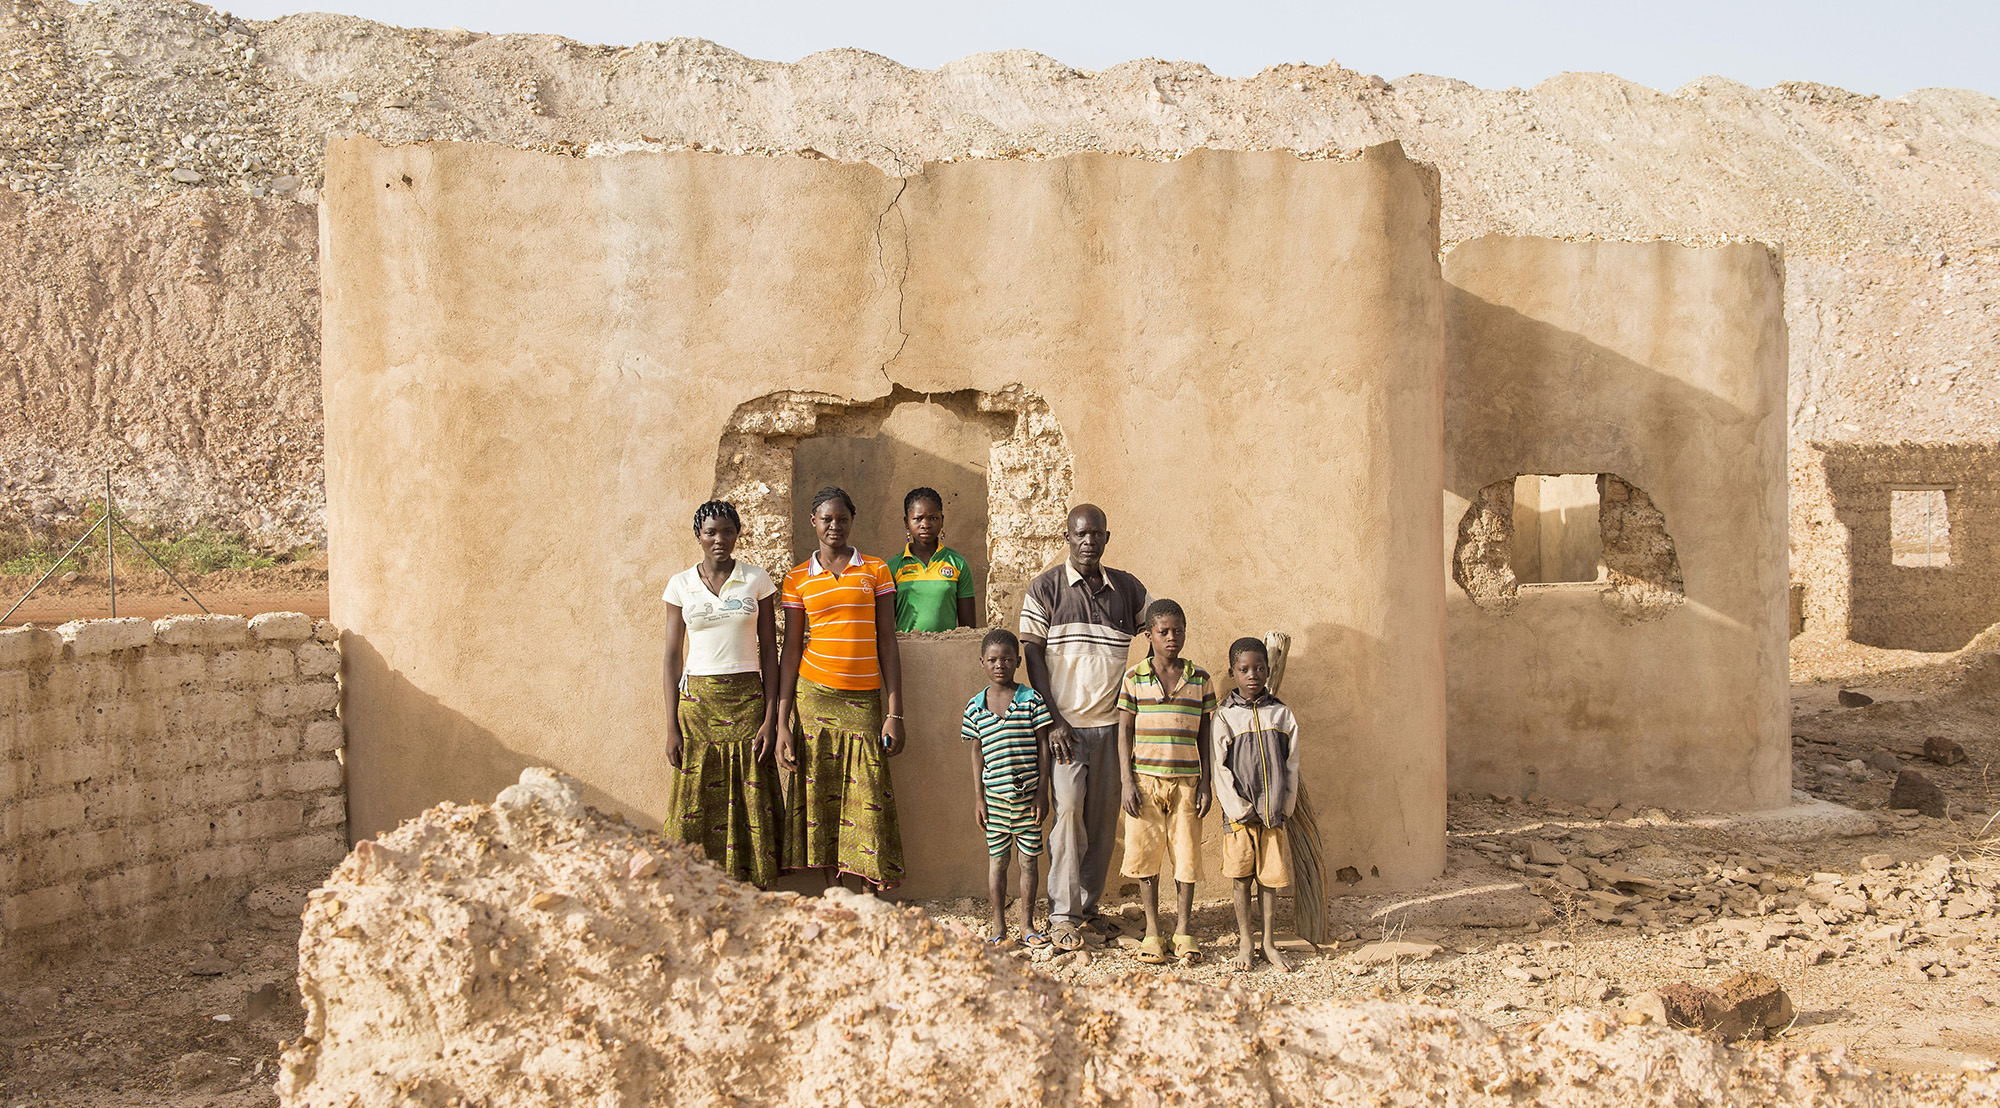 Extraction d’or au Burkina Faso: les profits avant les droits humains?